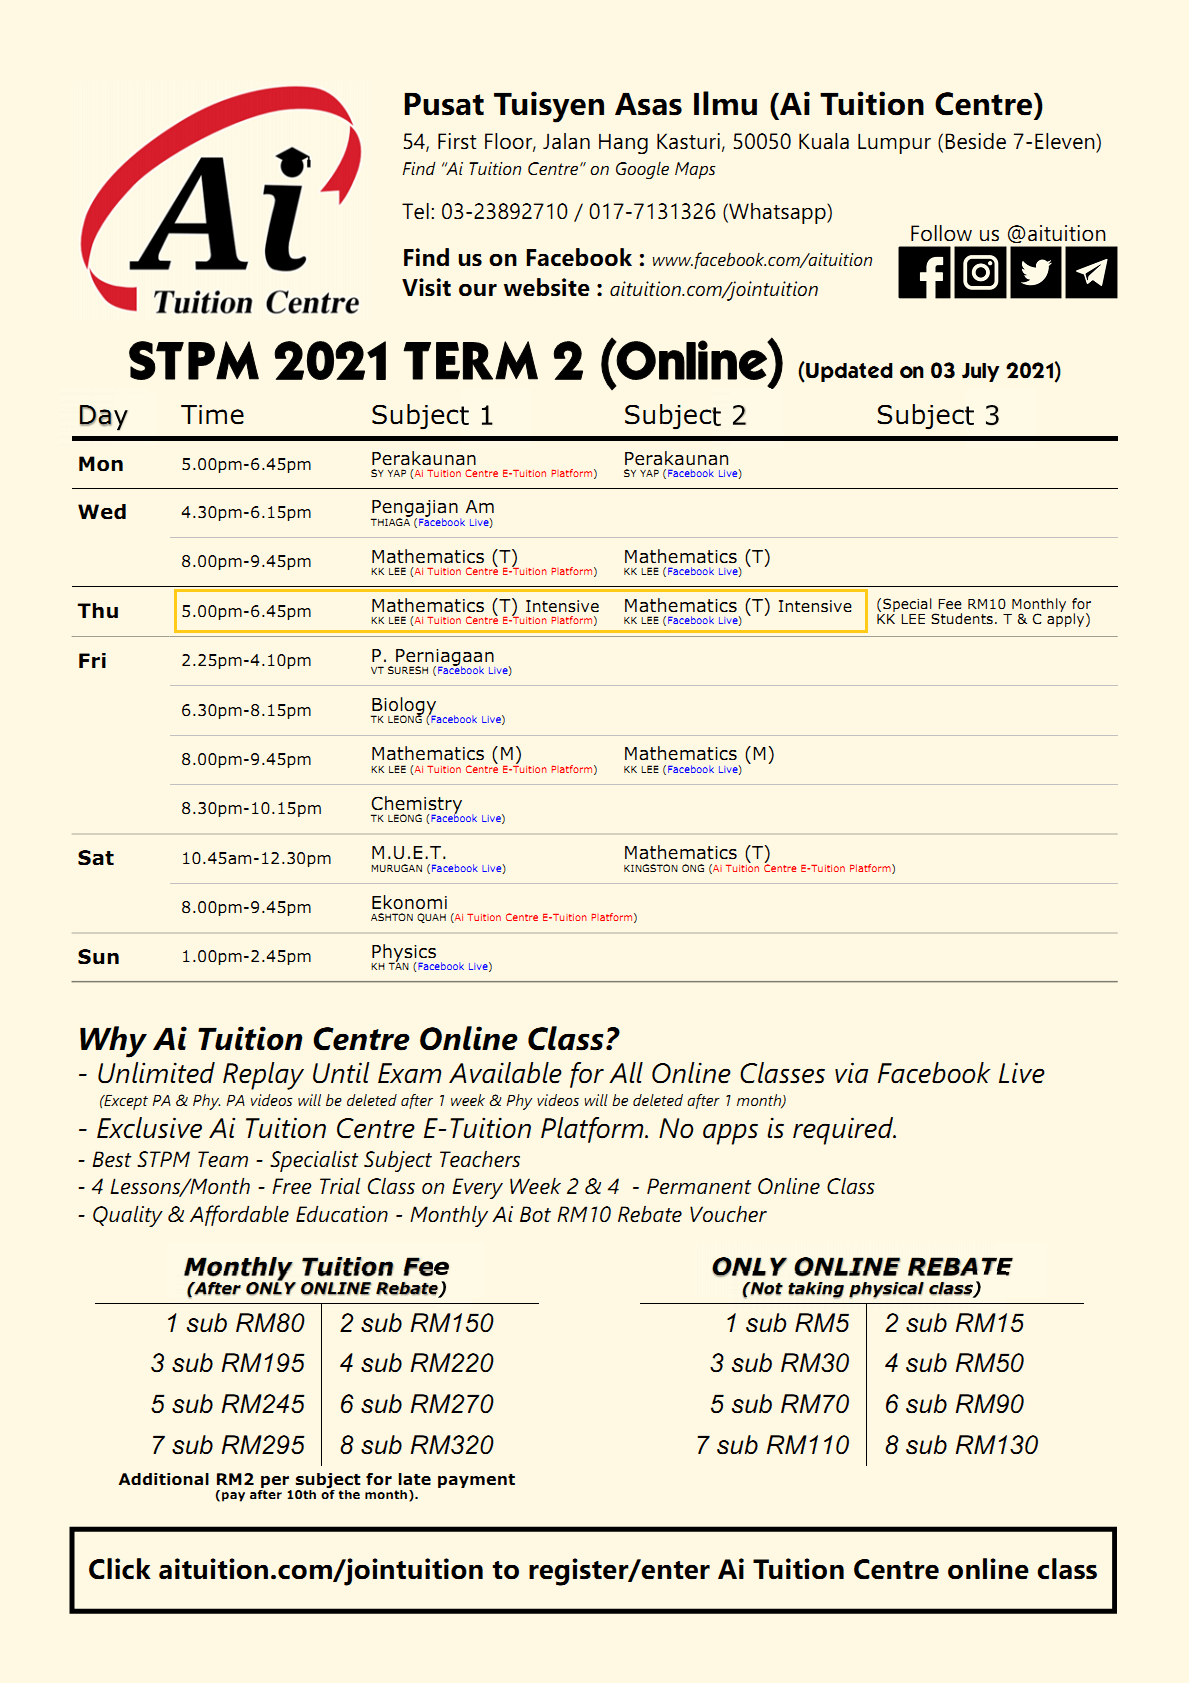 STPM Term 2 Intensive Online Class Timetable